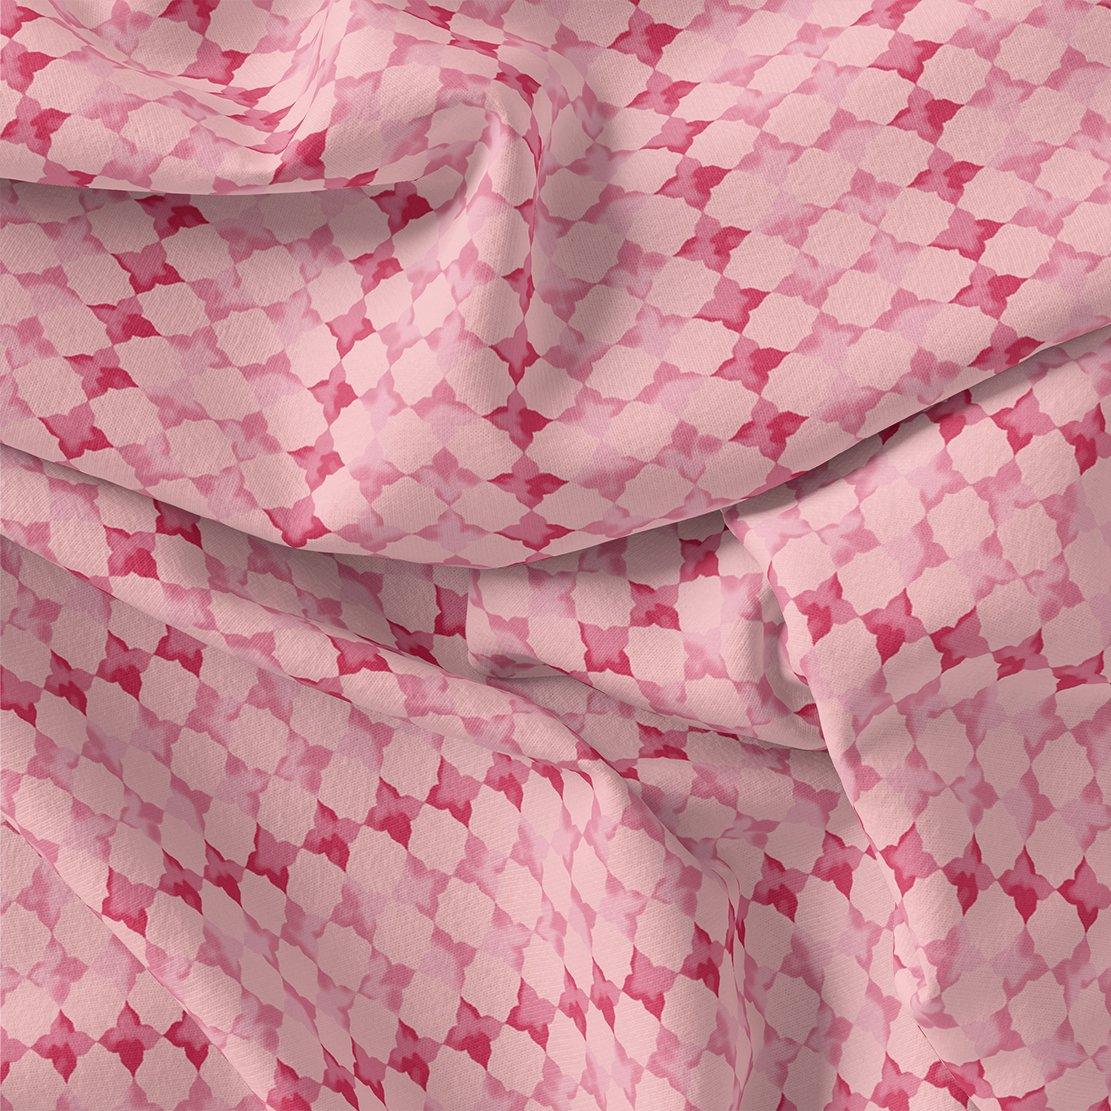 Lattice Star Patterns Digital Printed Fabric - Pure Chiffon - FAB VOGUE Studio®